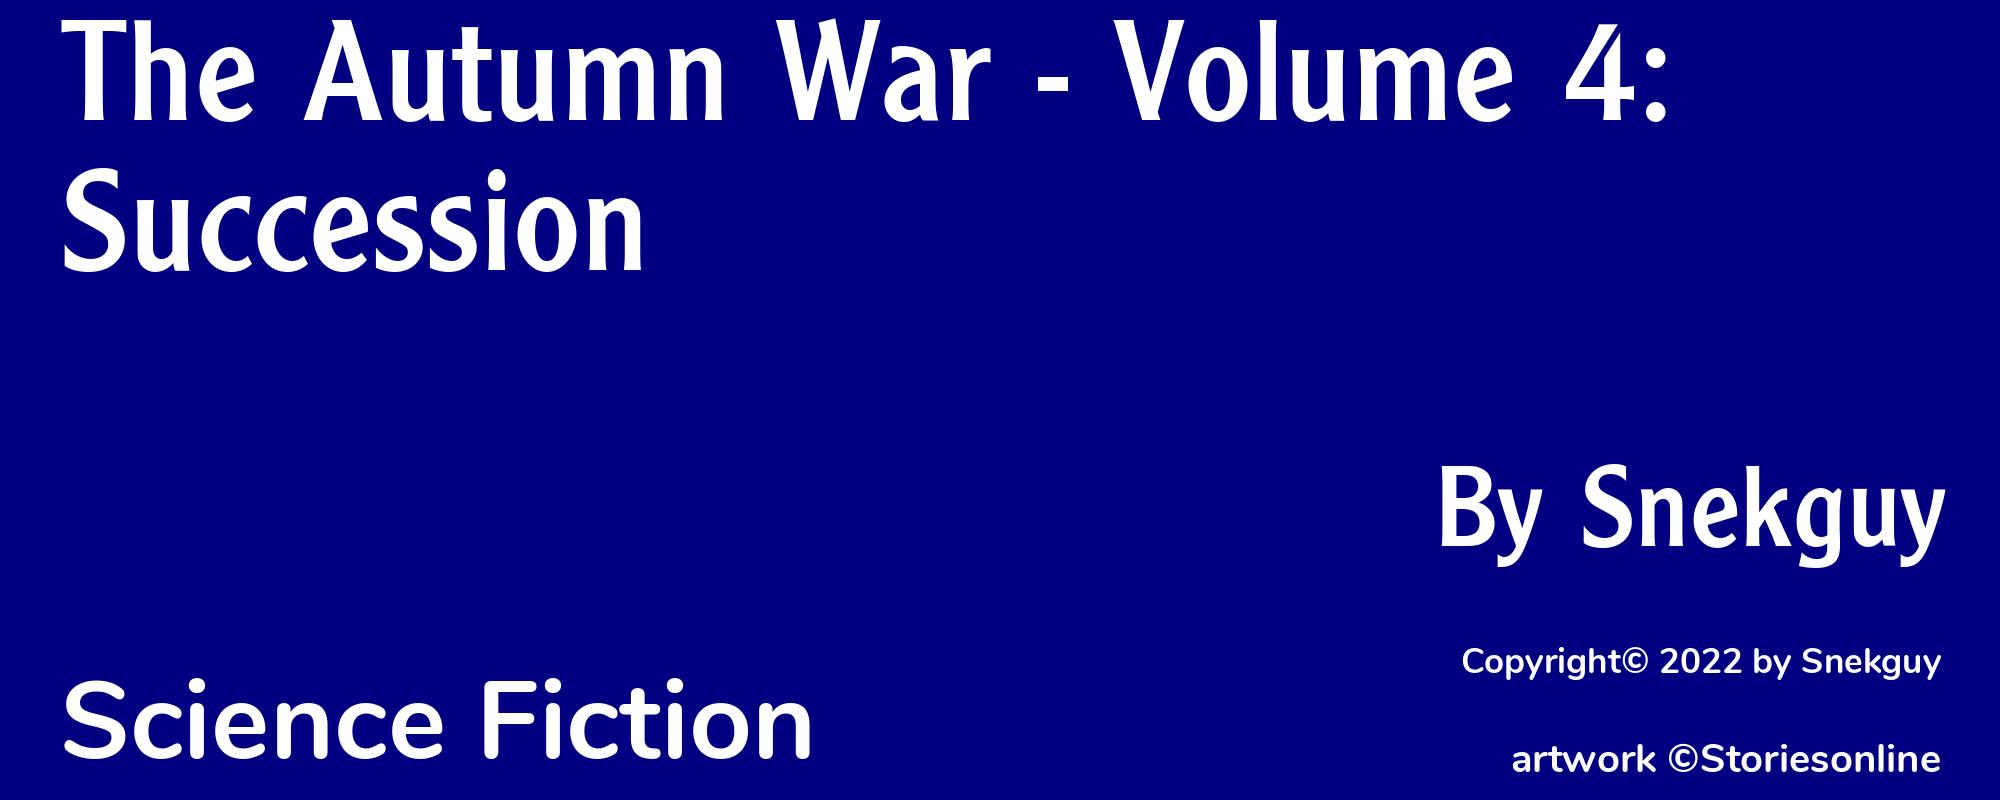 The Autumn War - Volume 4: Succession - Cover